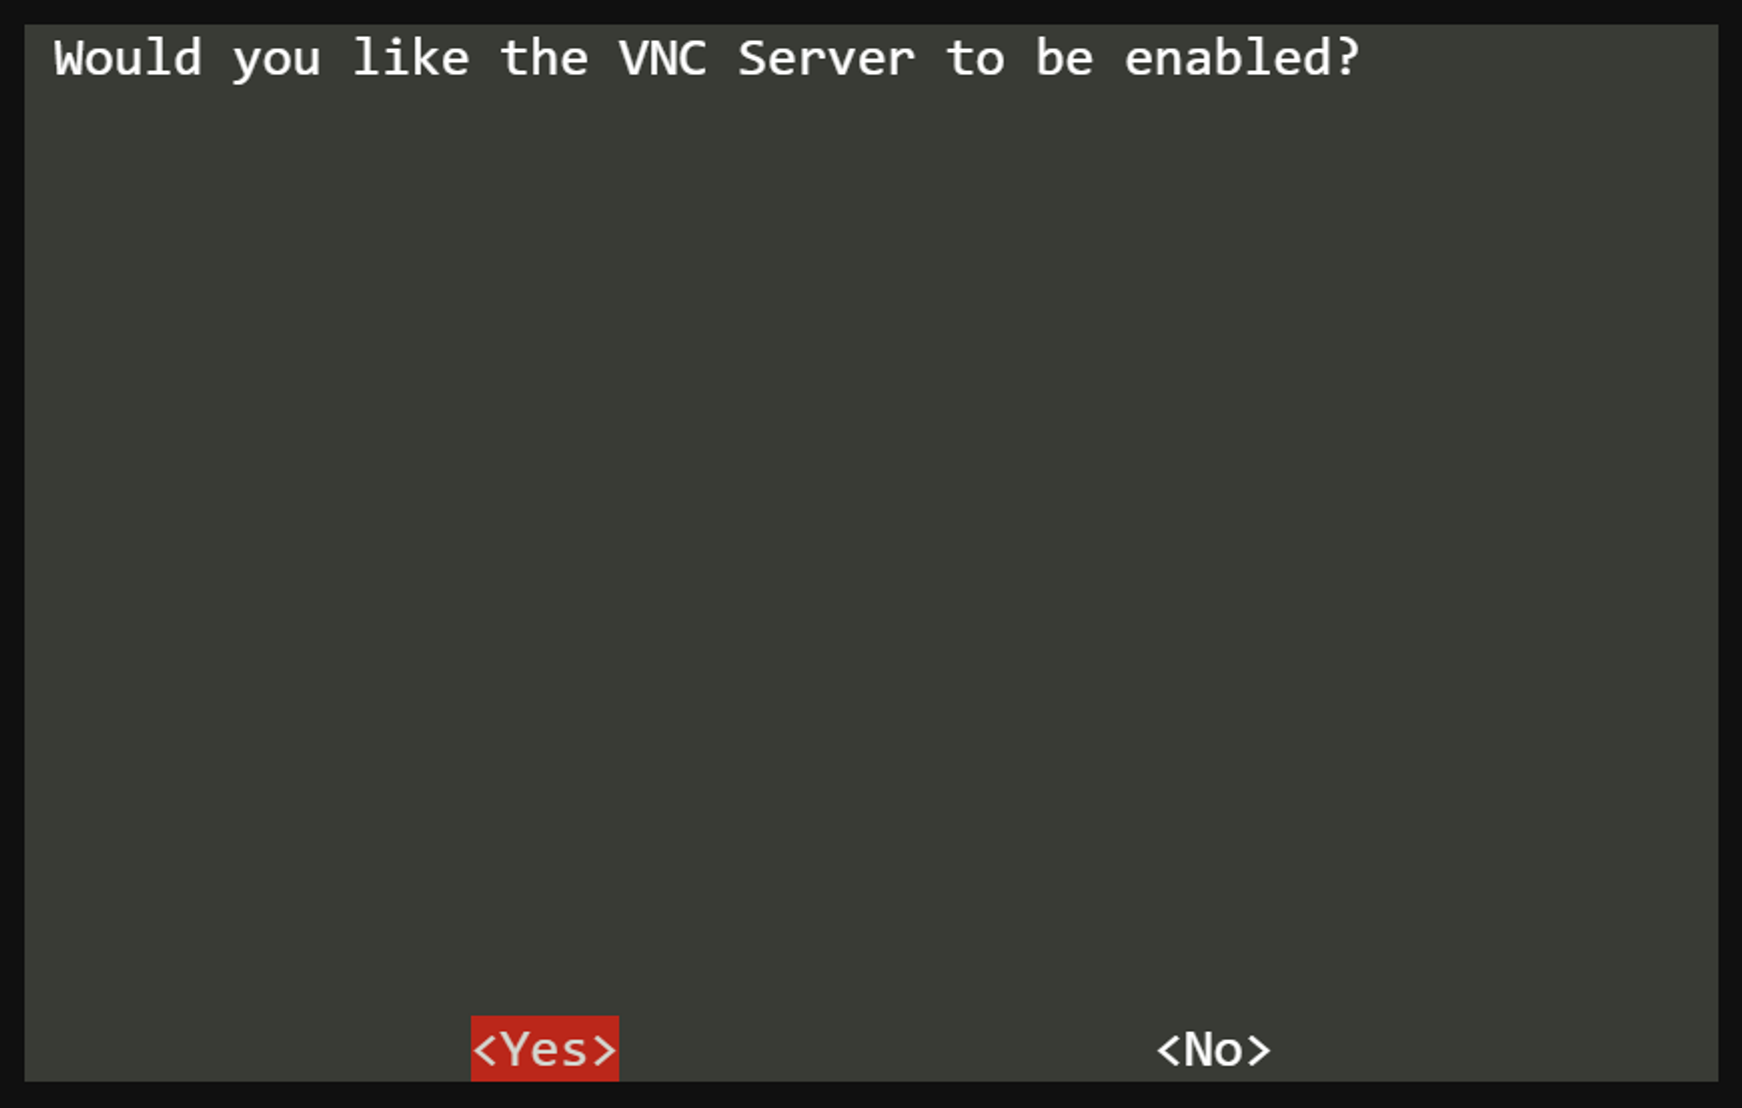 Confirming enabling the VNC Server